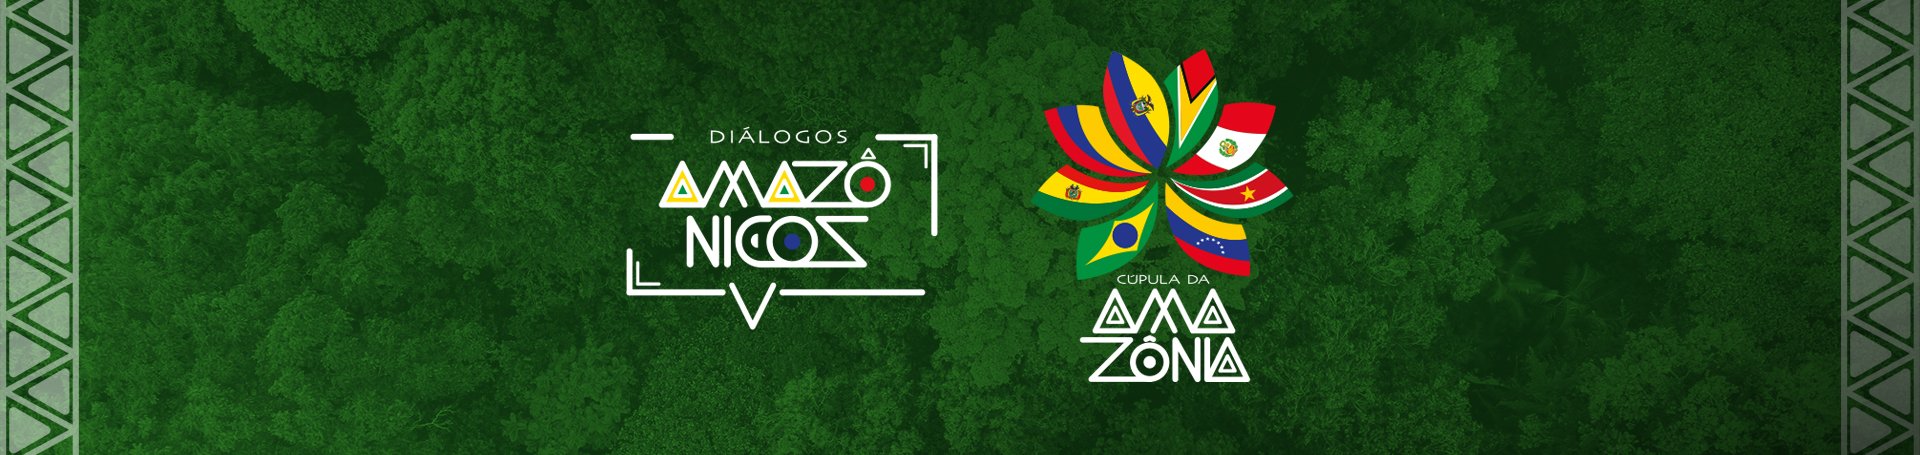 Banner divisor de área - Diálogos Amazônicos